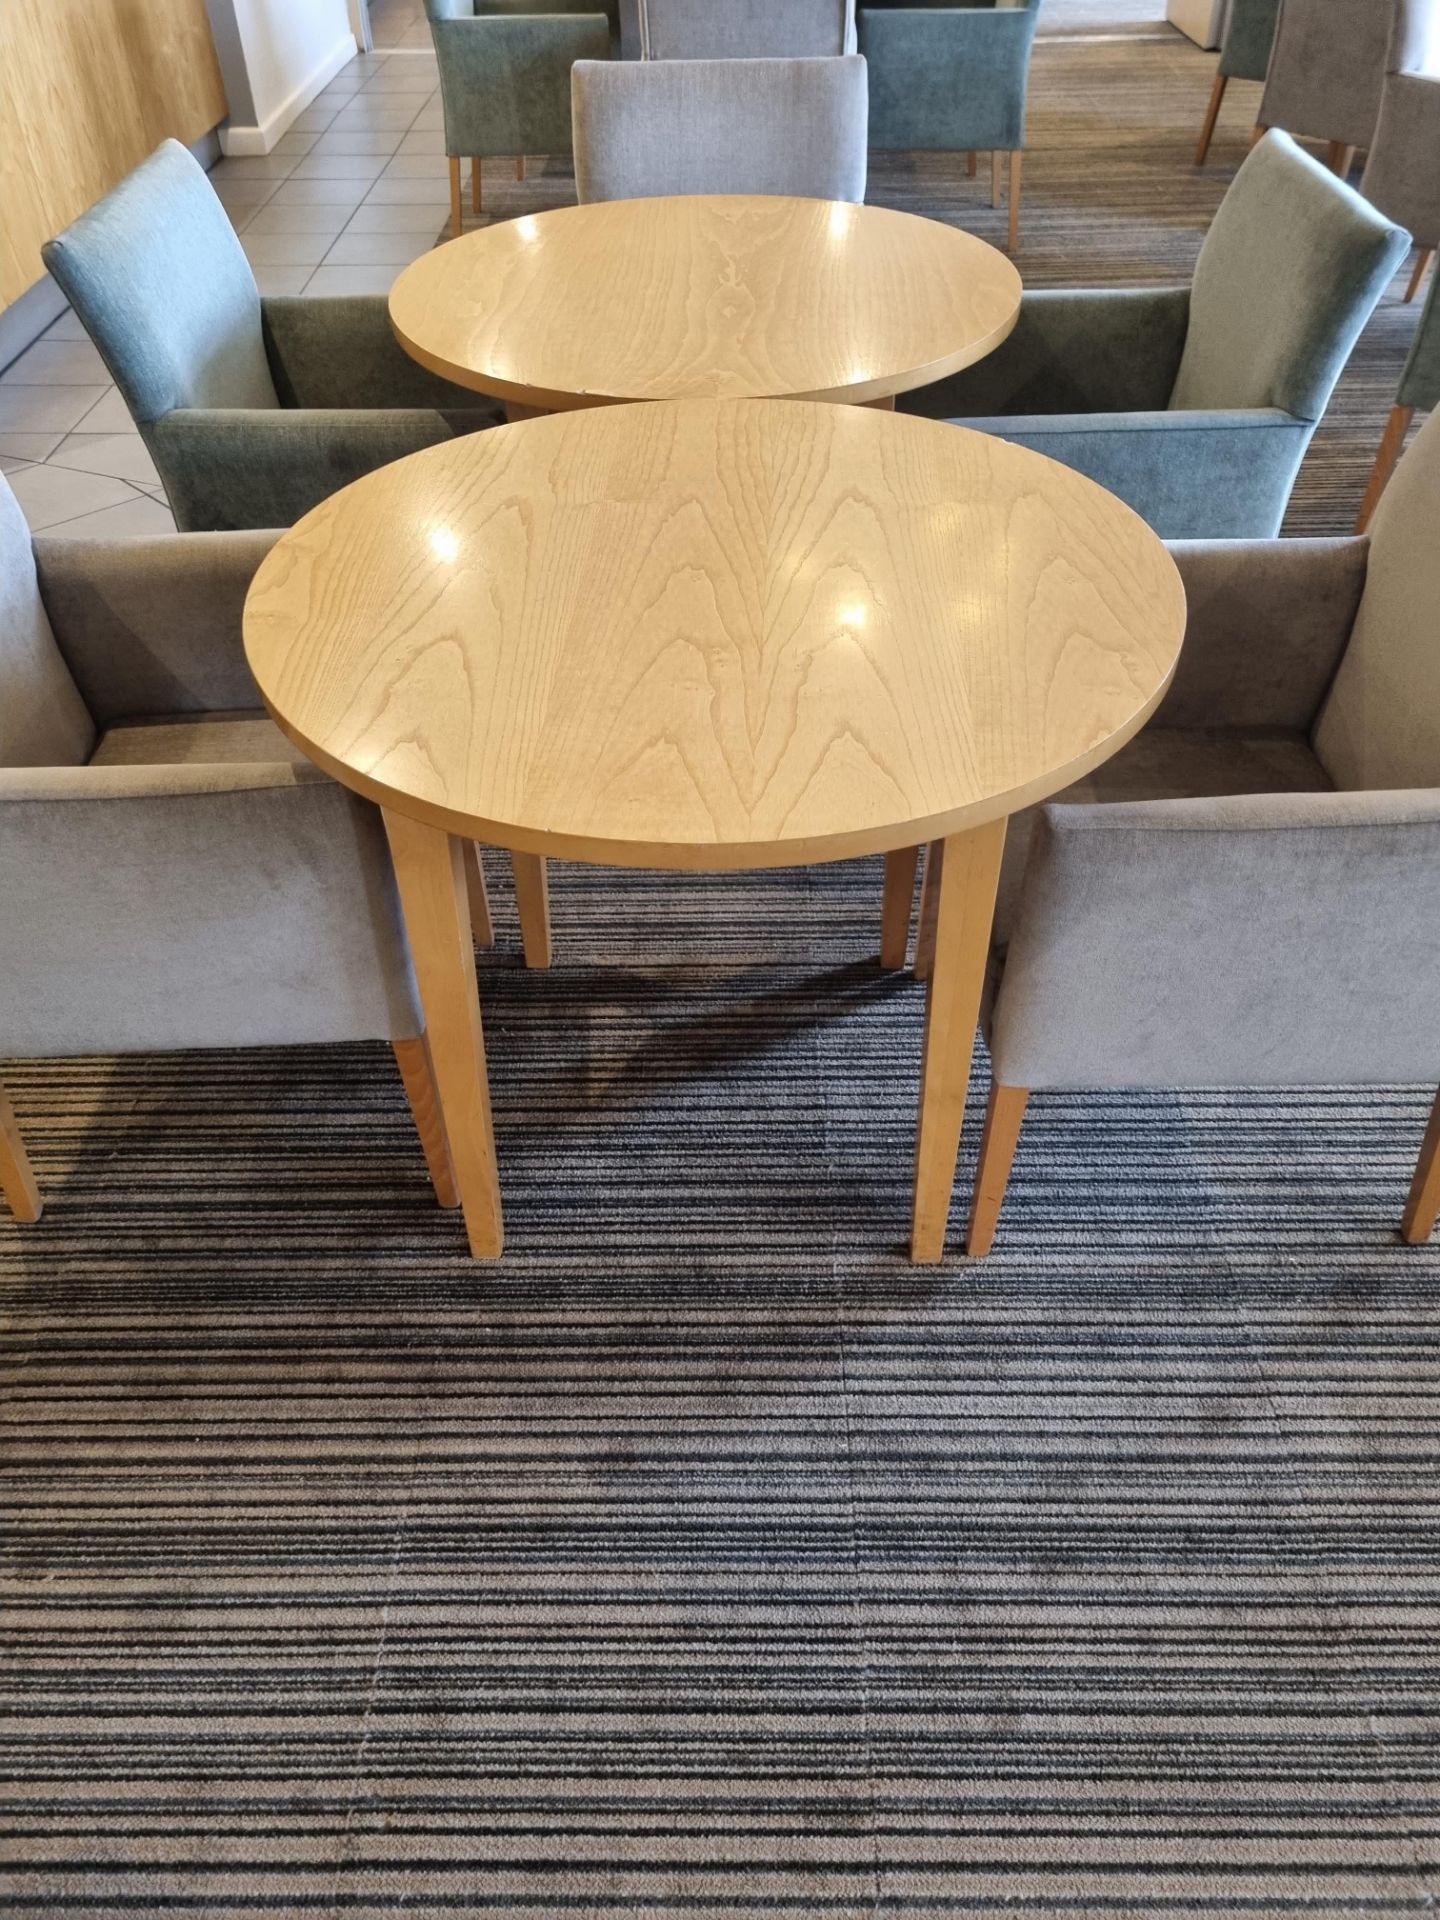 2 x Beech circular dining tables 910 x 750mm